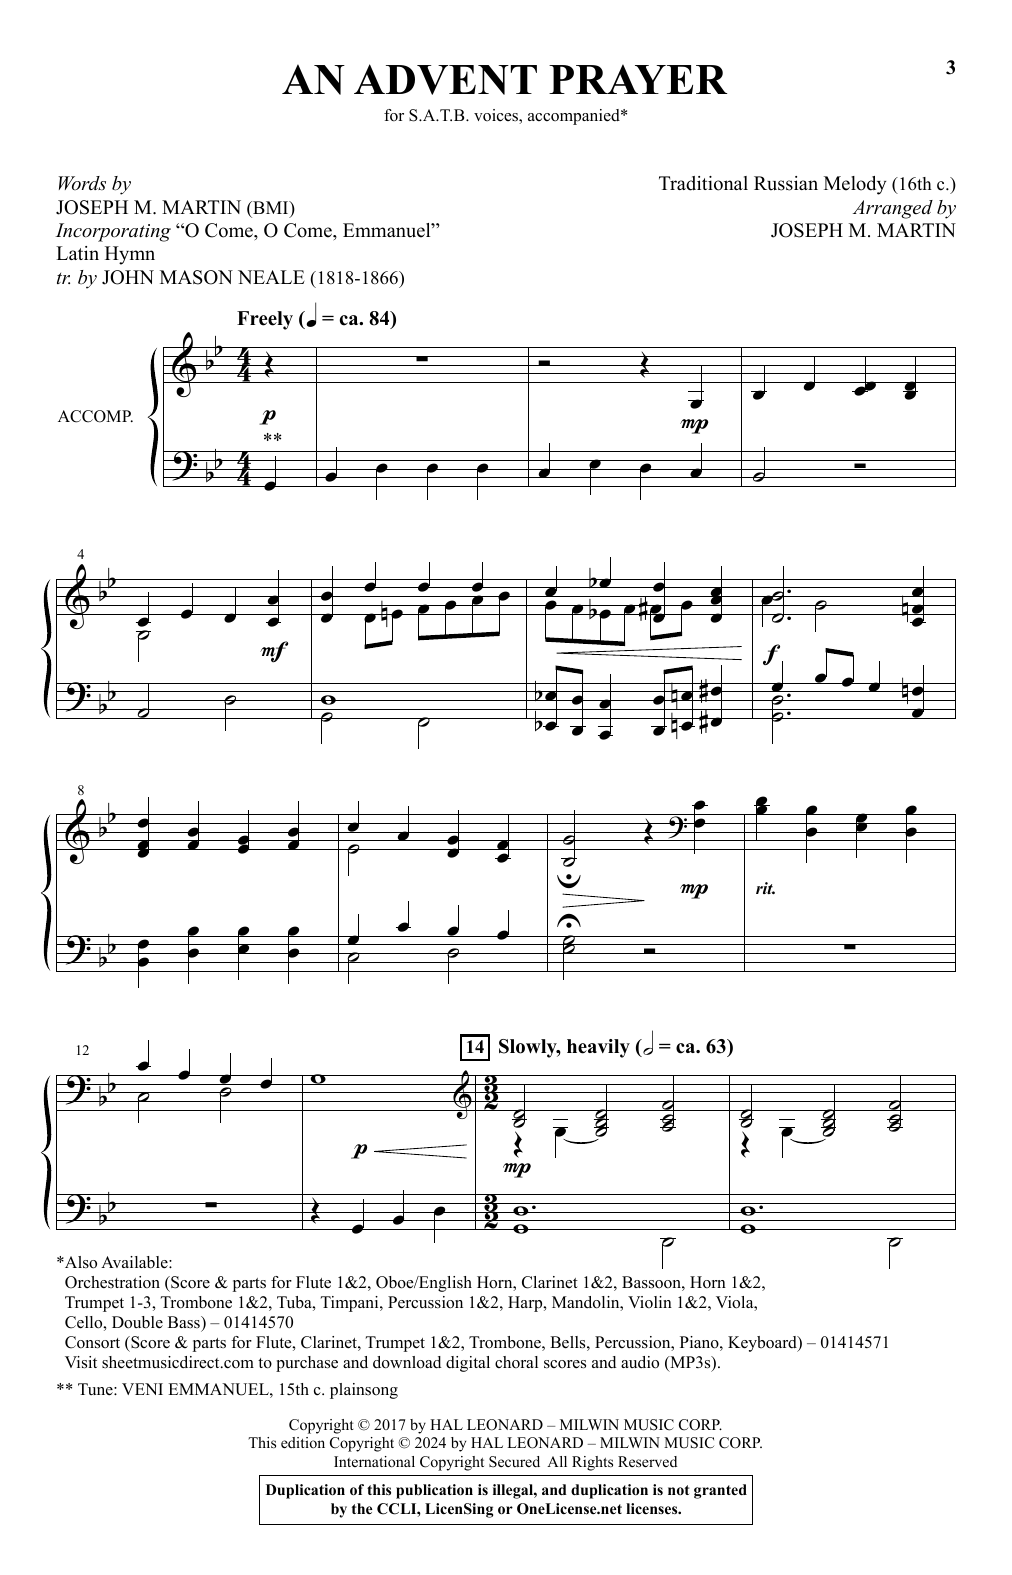 Joseph M. Martin An Advent Prayer Sheet Music Notes & Chords for SATB Choir - Download or Print PDF